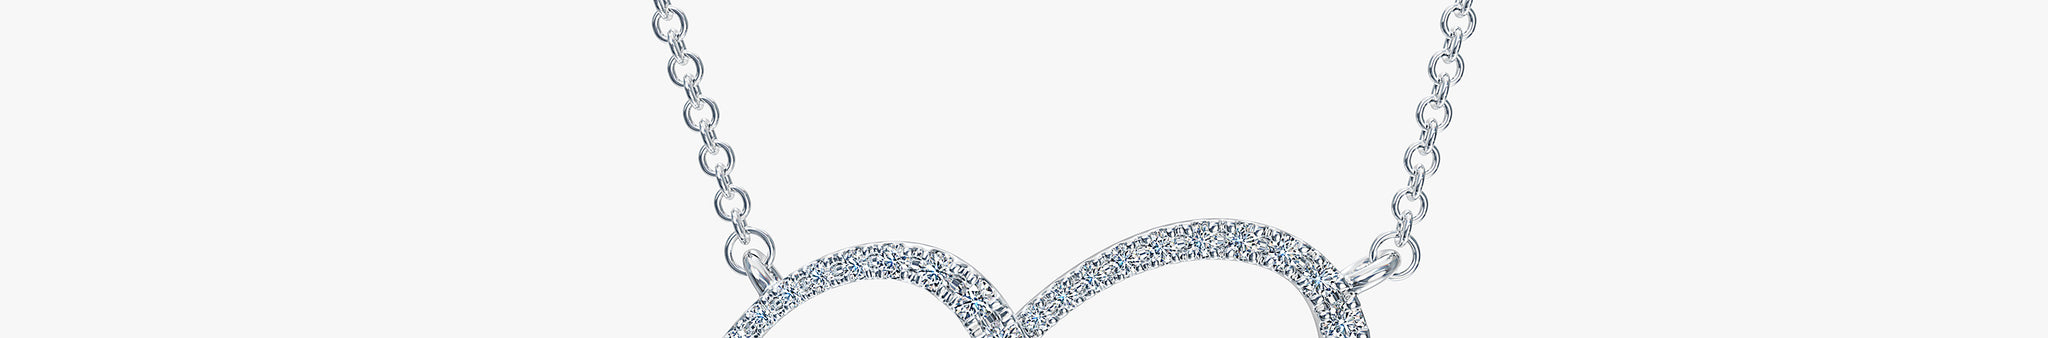 J'EVAR 14KT White Gold Heart ALTR Lab Grown Diamond Necklace Front View